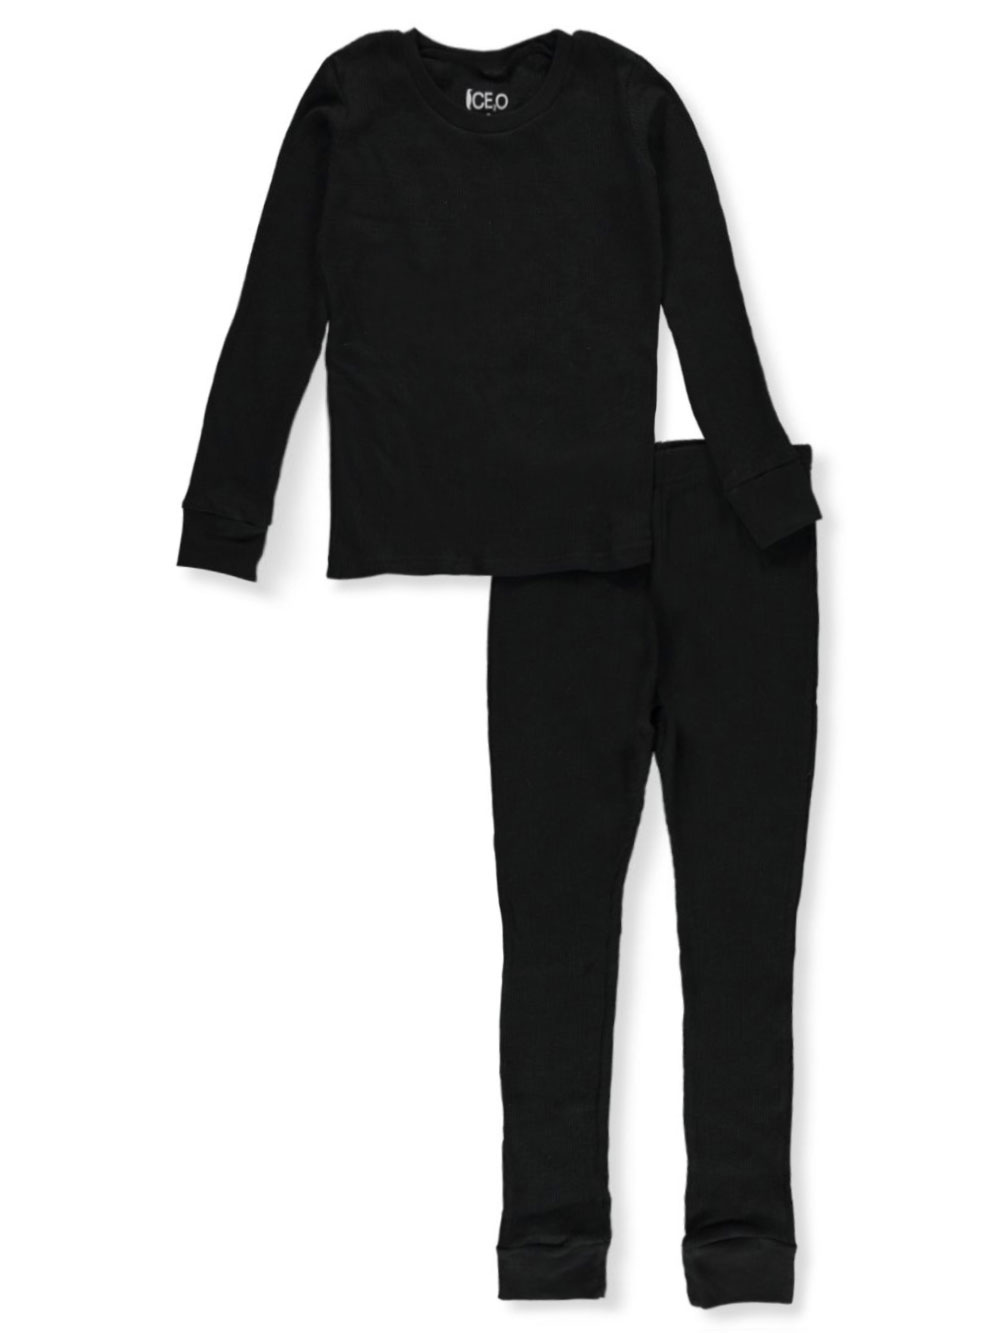 Black/Gray Pant Sets